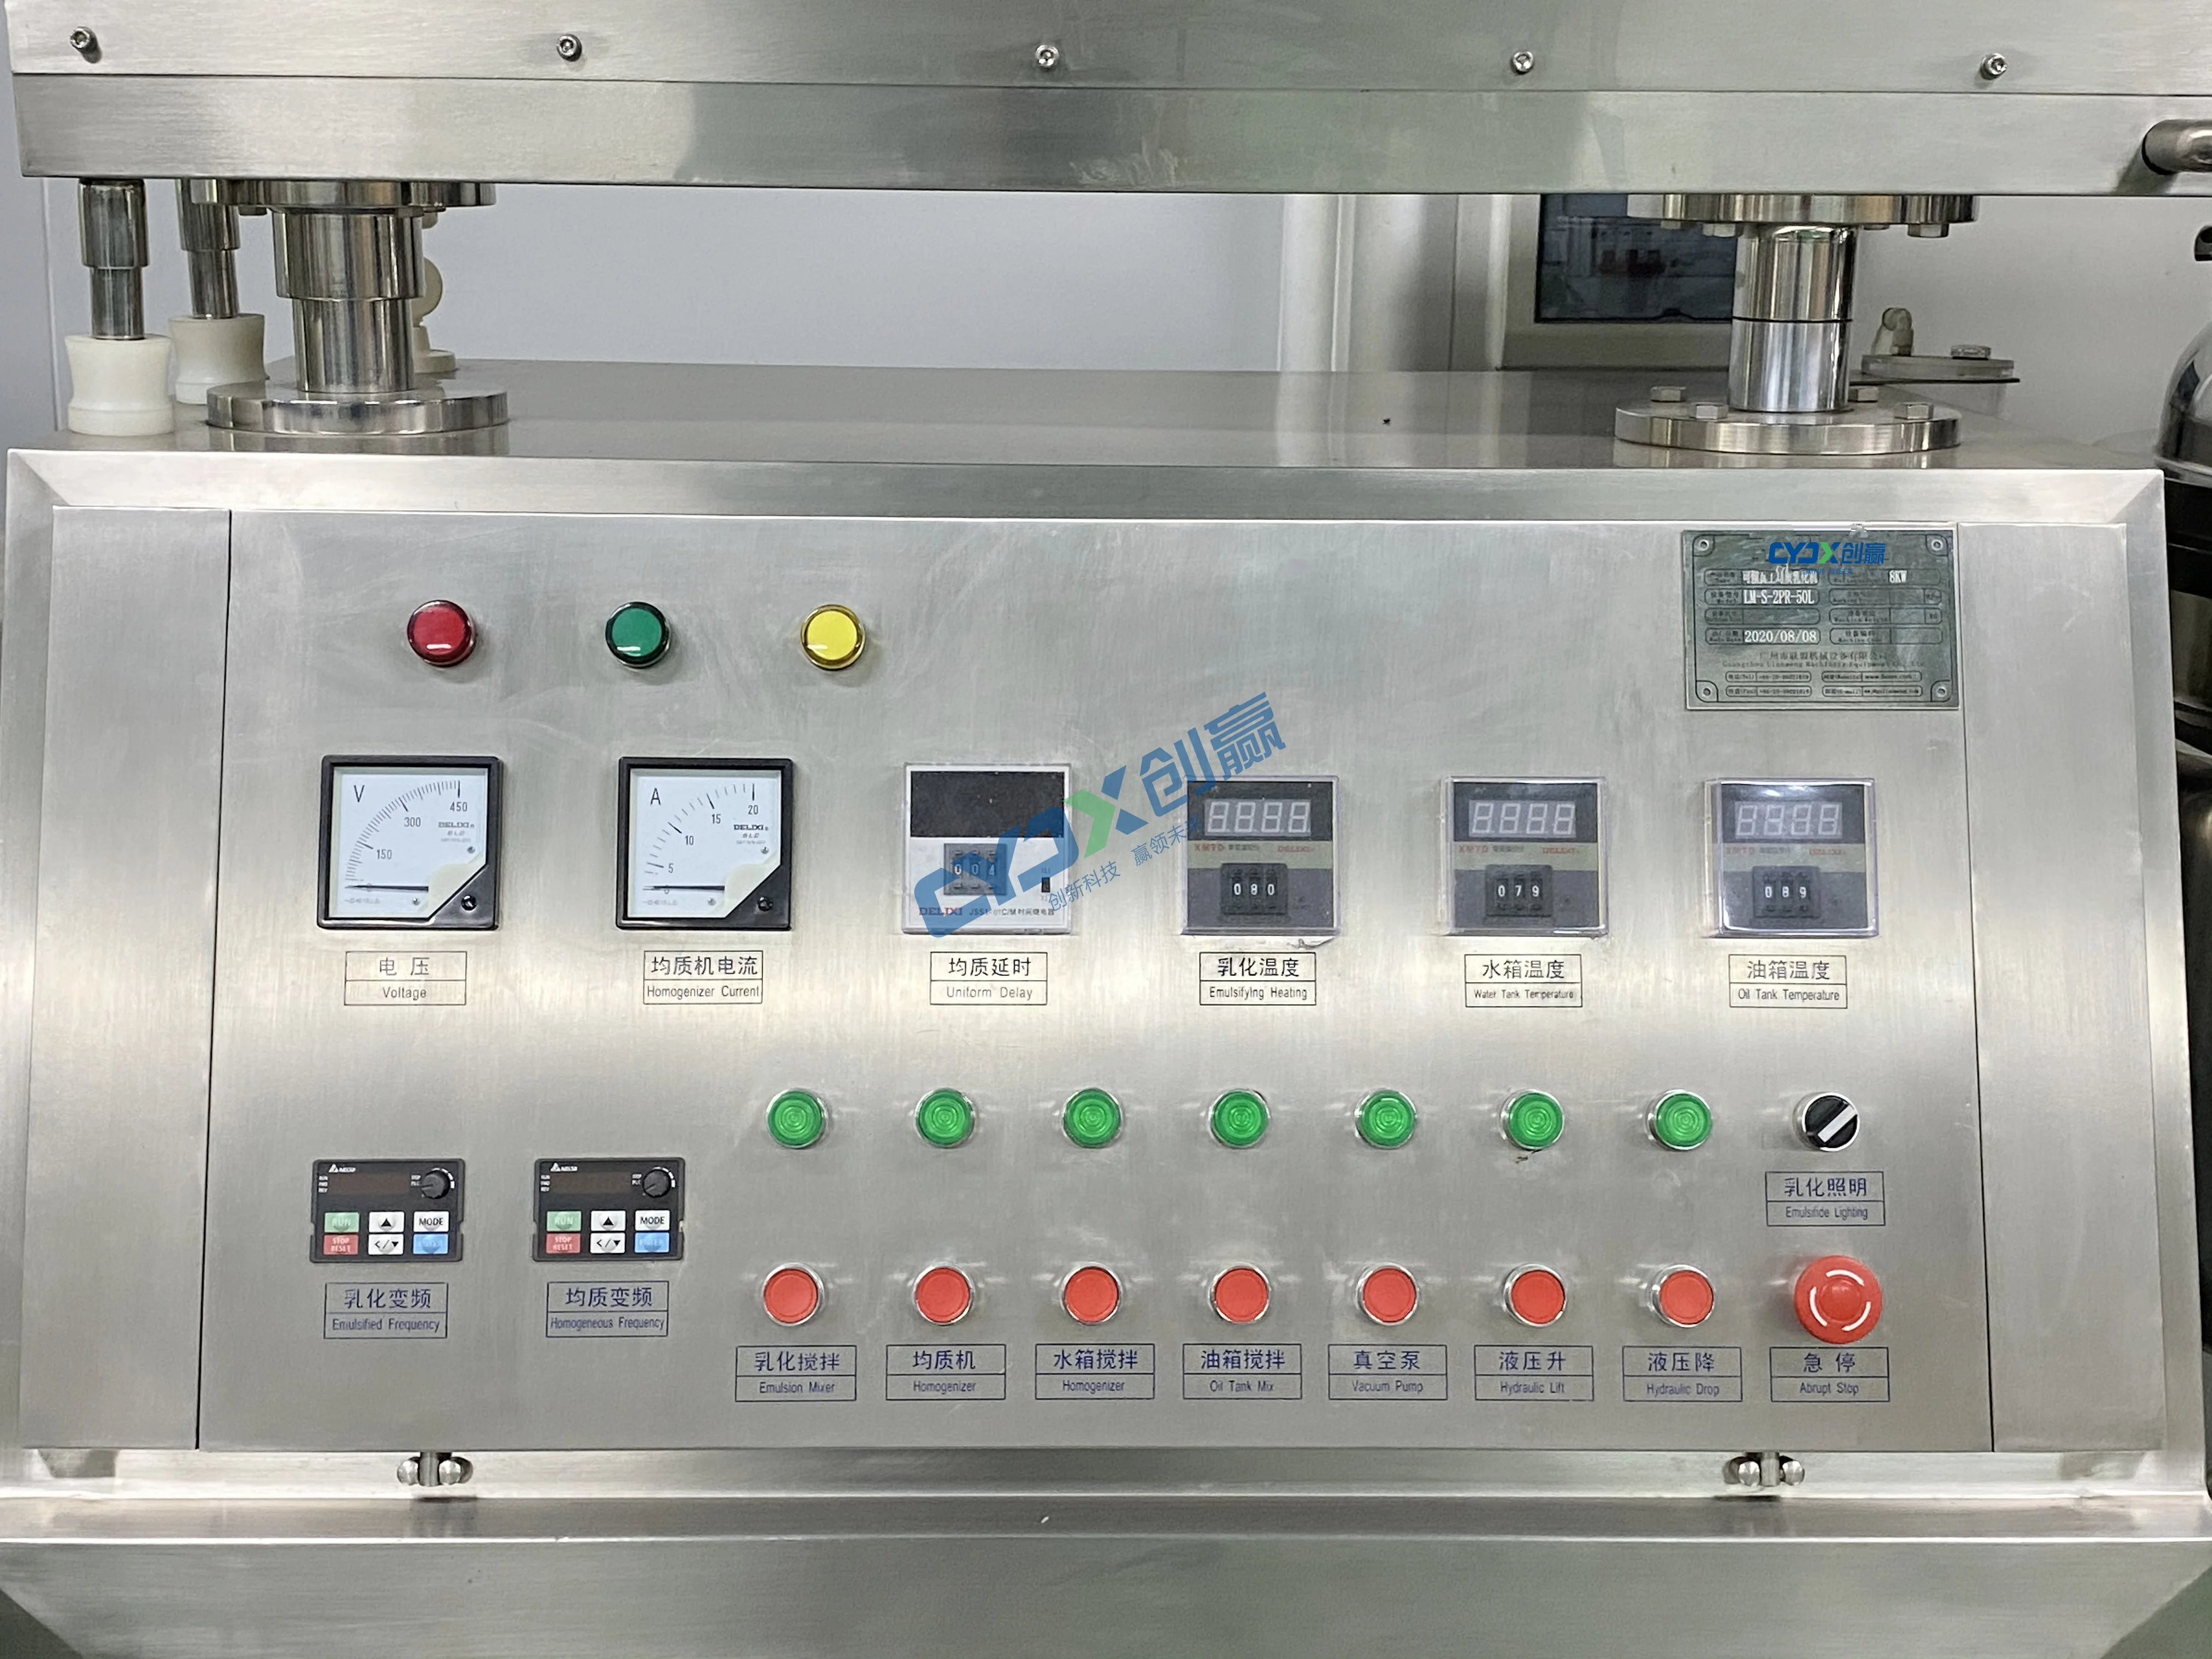 CYJX Vacuum Homogenizer Emulsion Soap Making Machine Cream Mixer Cosmetic Production Line Equipment